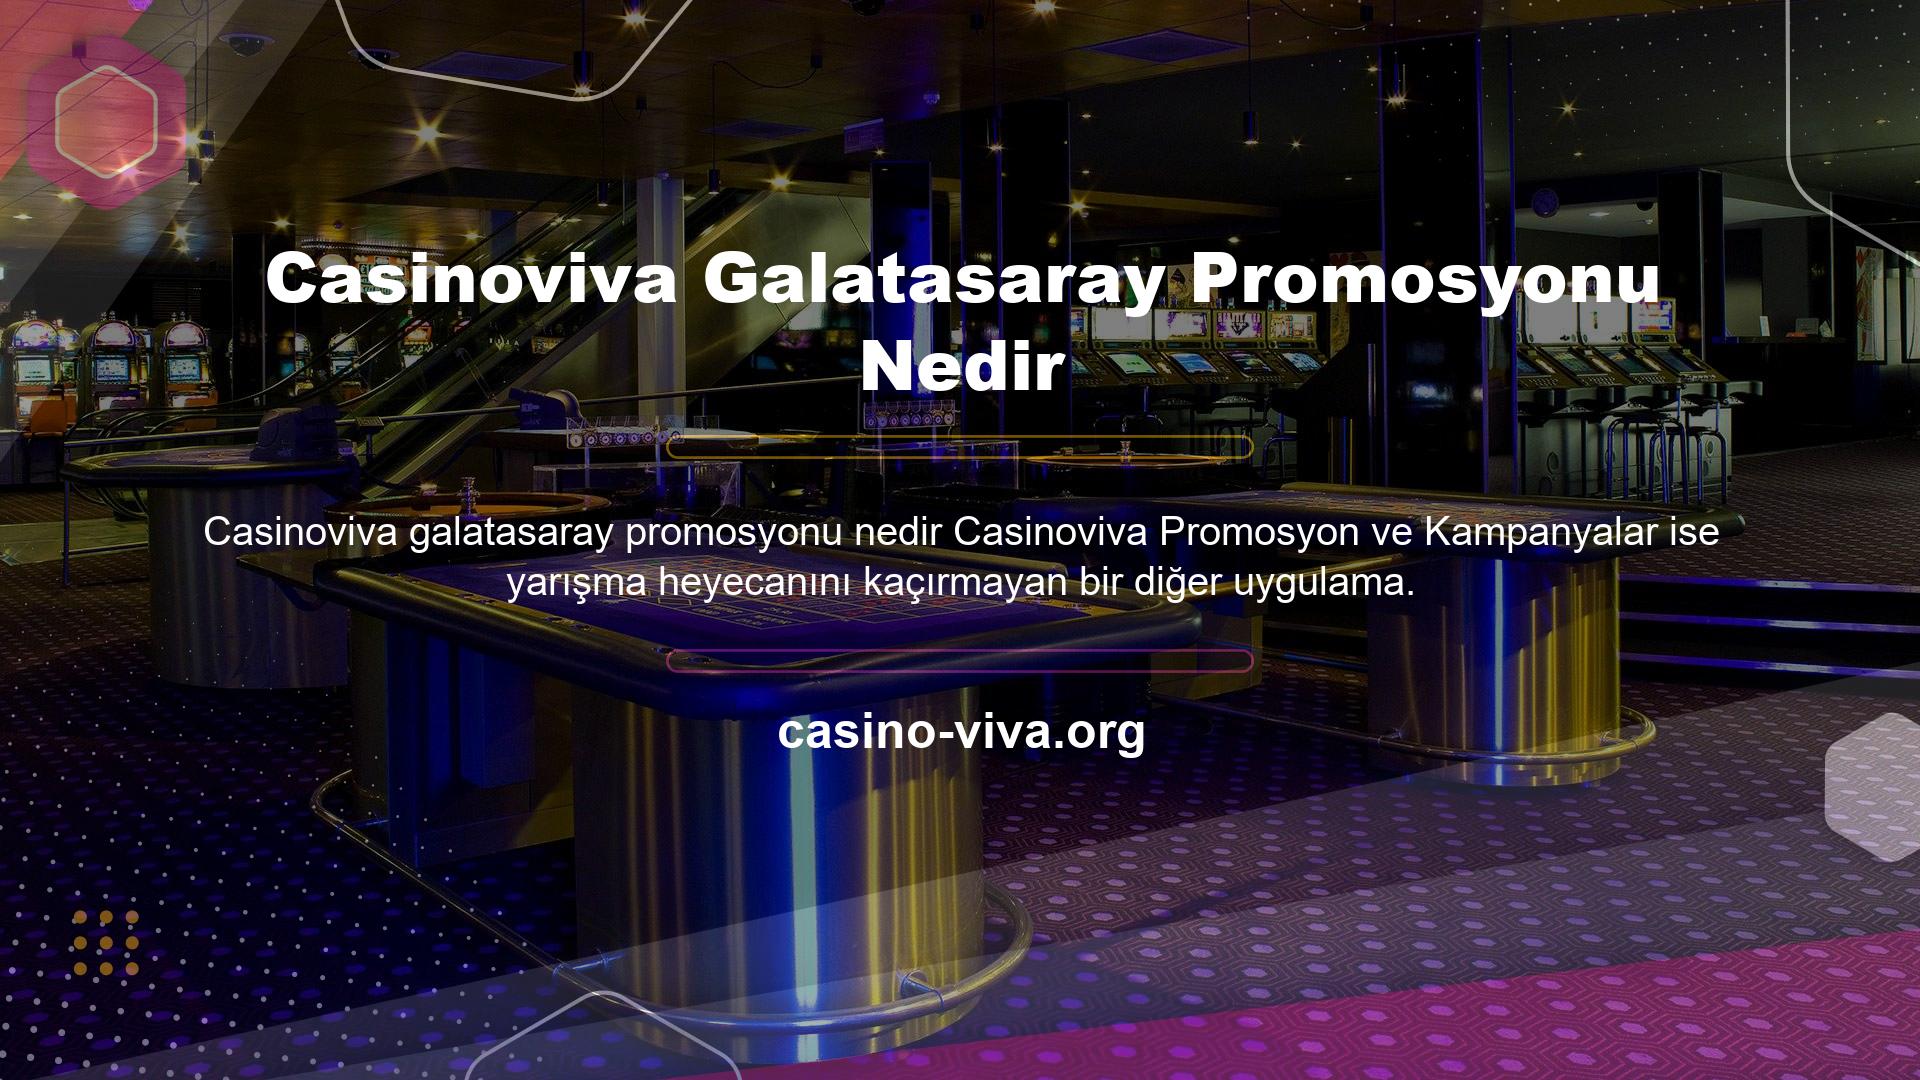 Casinoviva Galatasaray Promosyonu Nedir